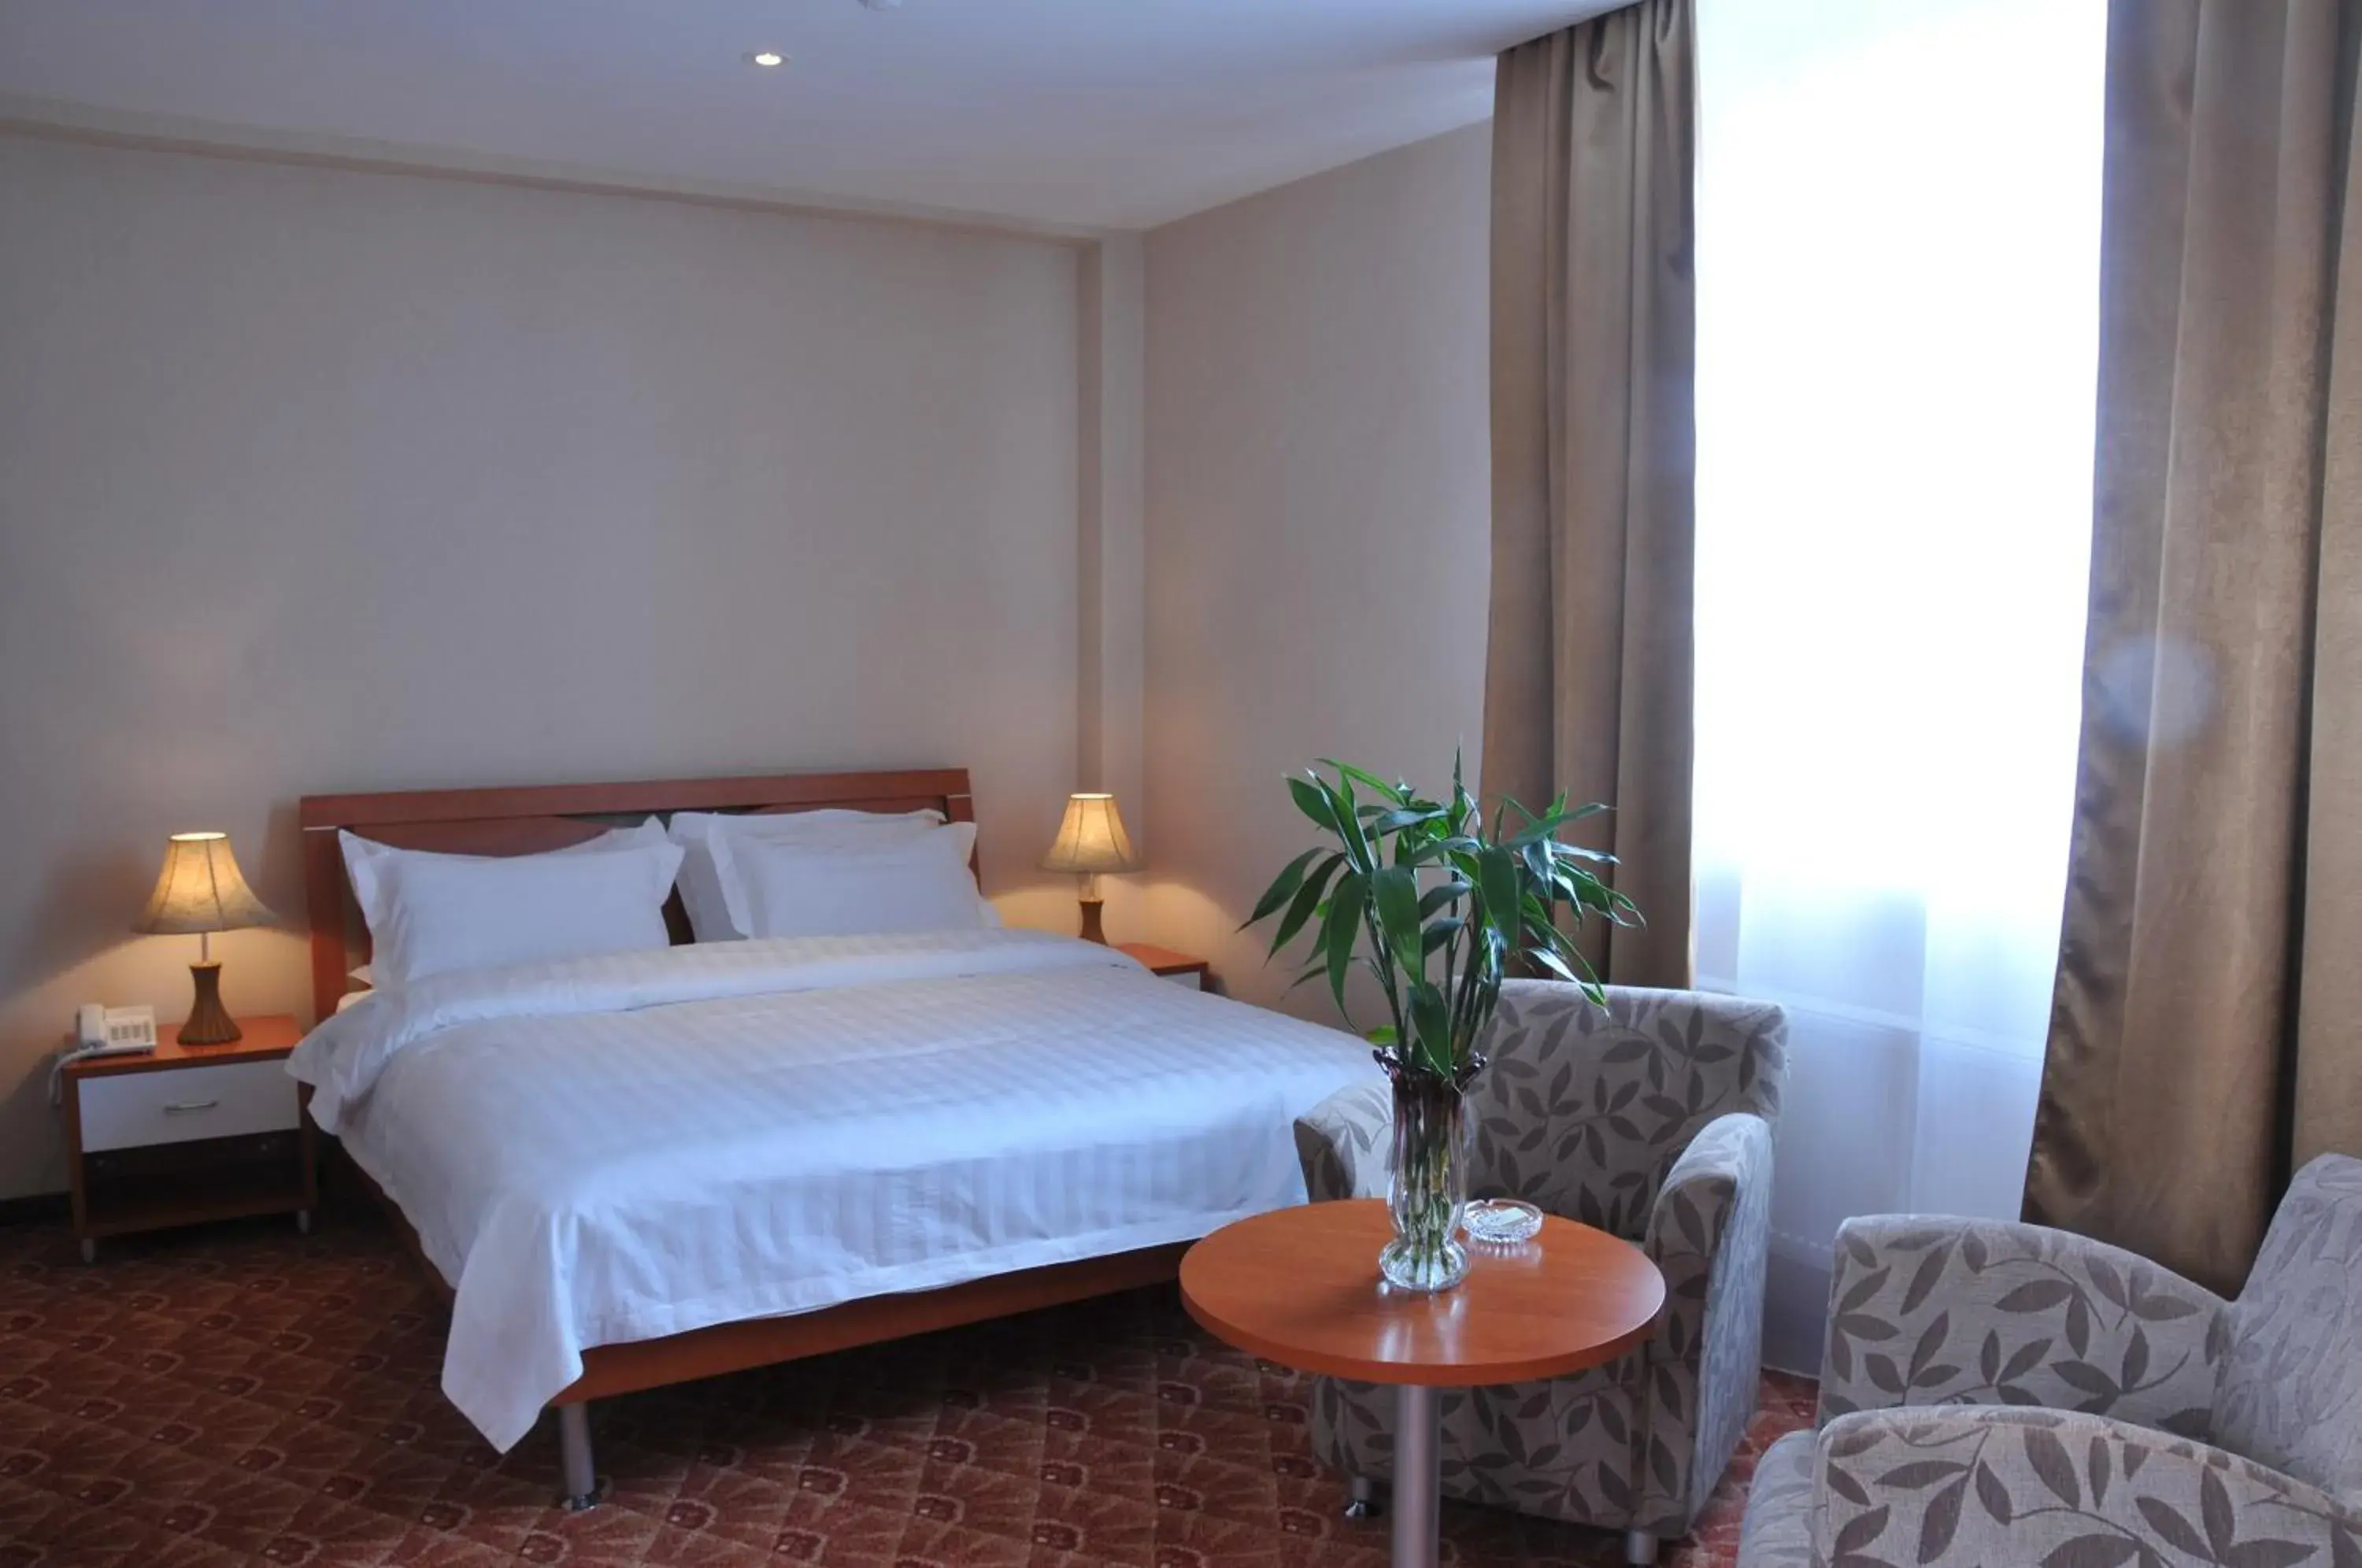 Bed, Room Photo in Springs Hotel